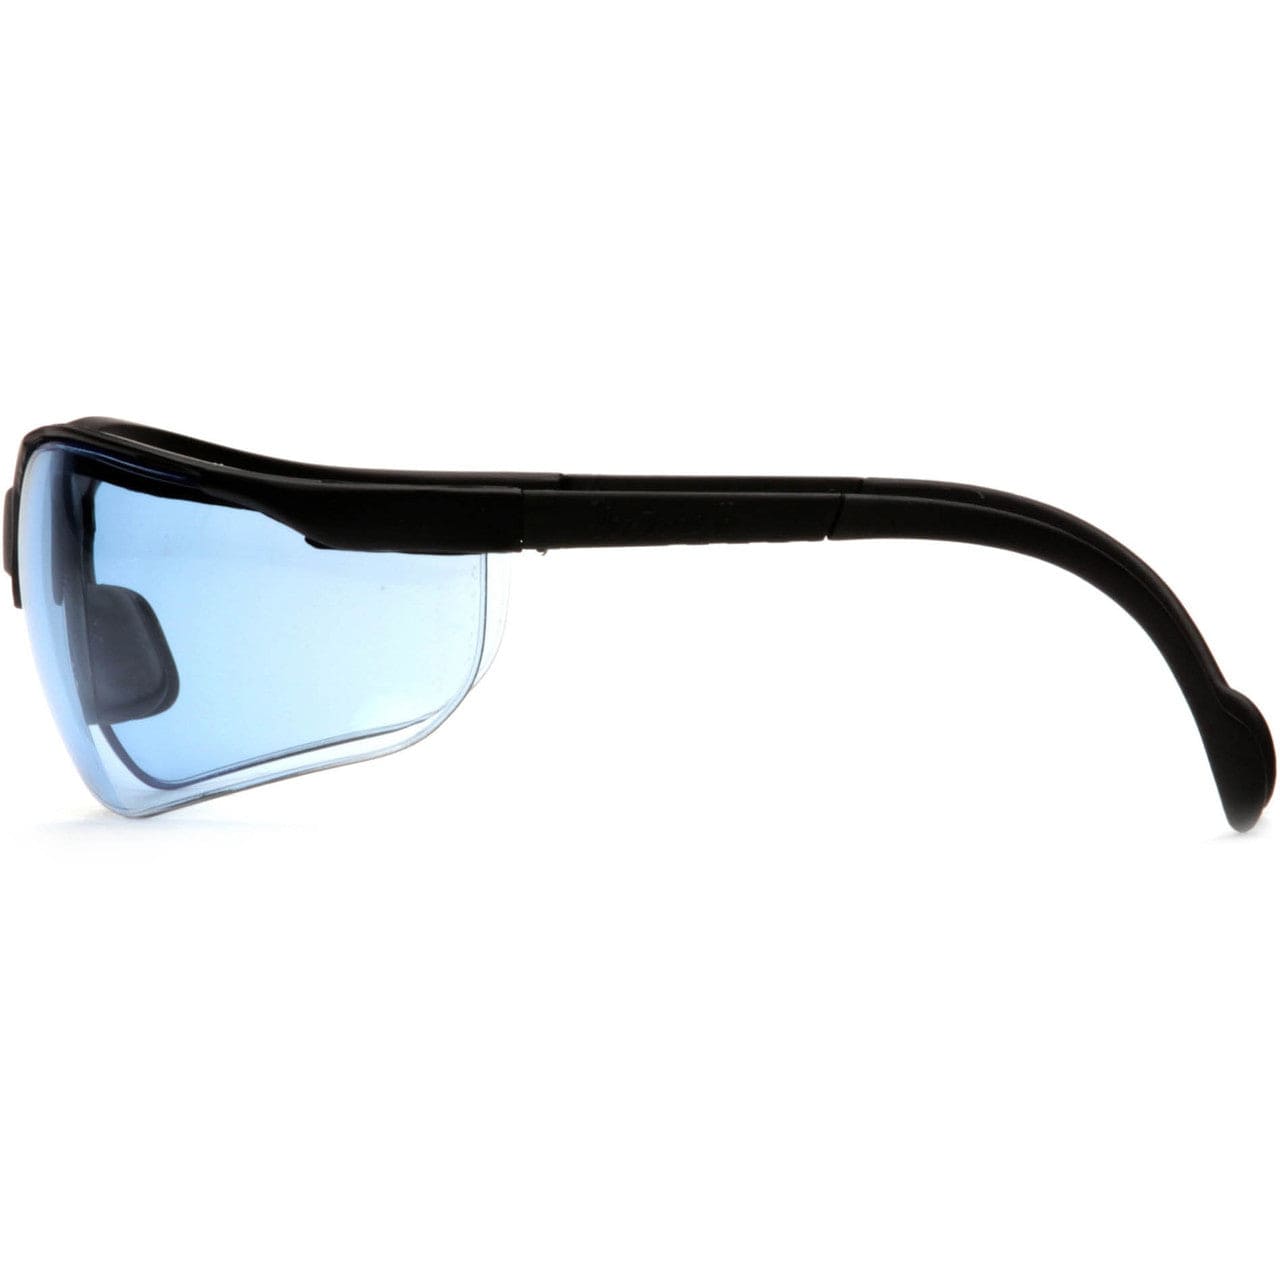 Pyramex Venture 2 Safety Glasses Black Frame Infinity Blue Lens SB1860S Side View